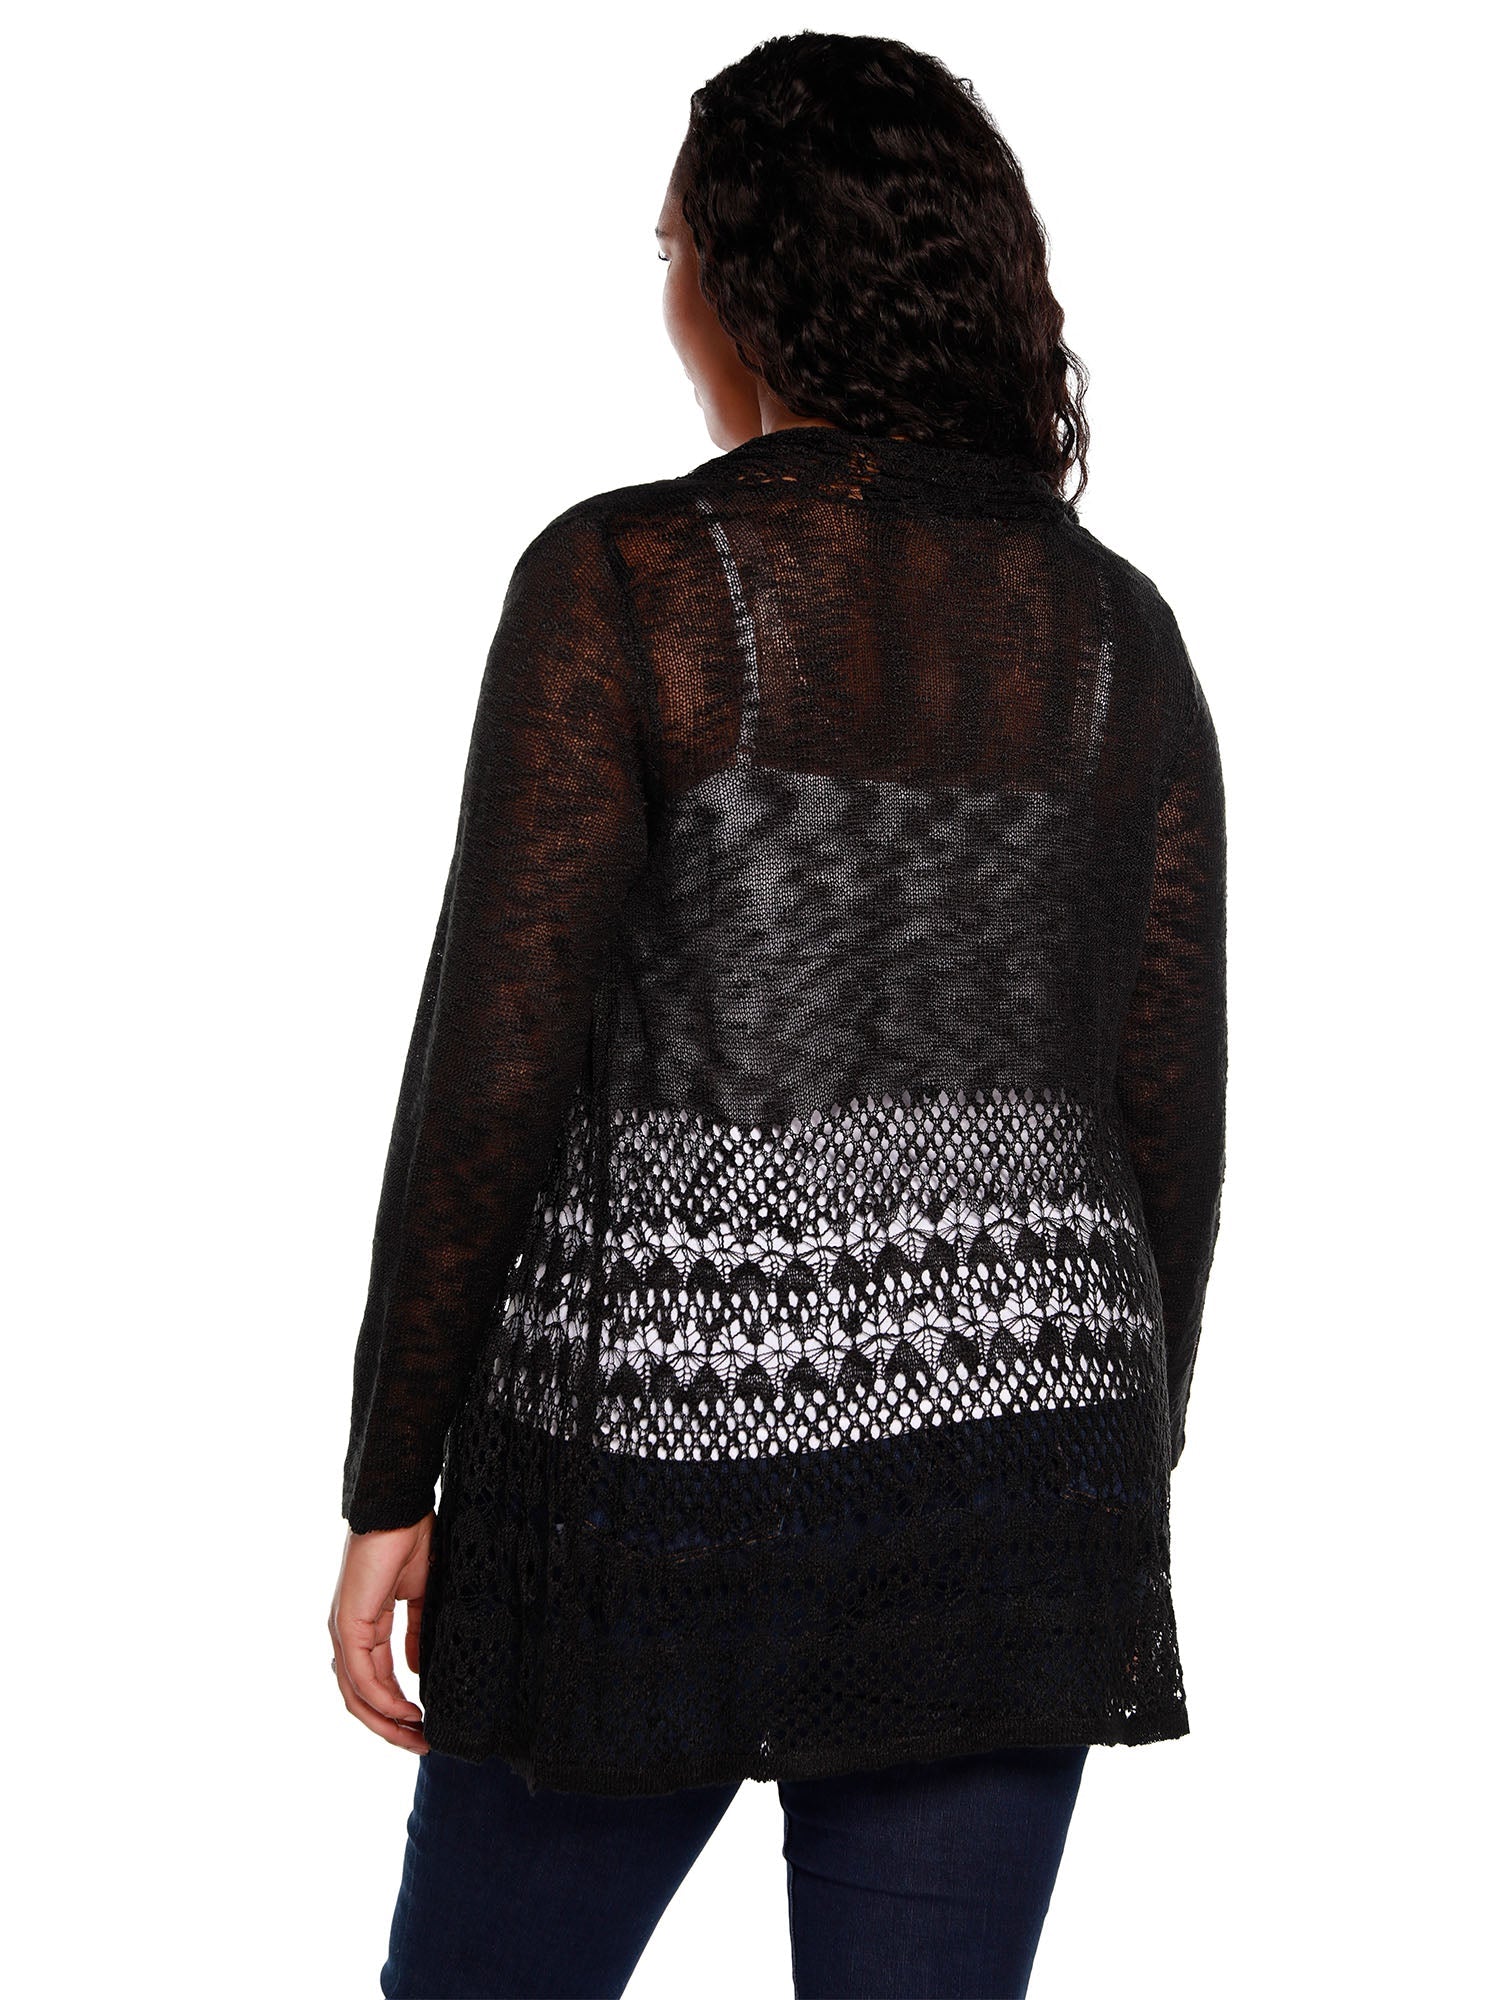 Women's Long Sleeve Crochet Swing Cardigan with Shawl Collar in a Soft Knit | Curvy